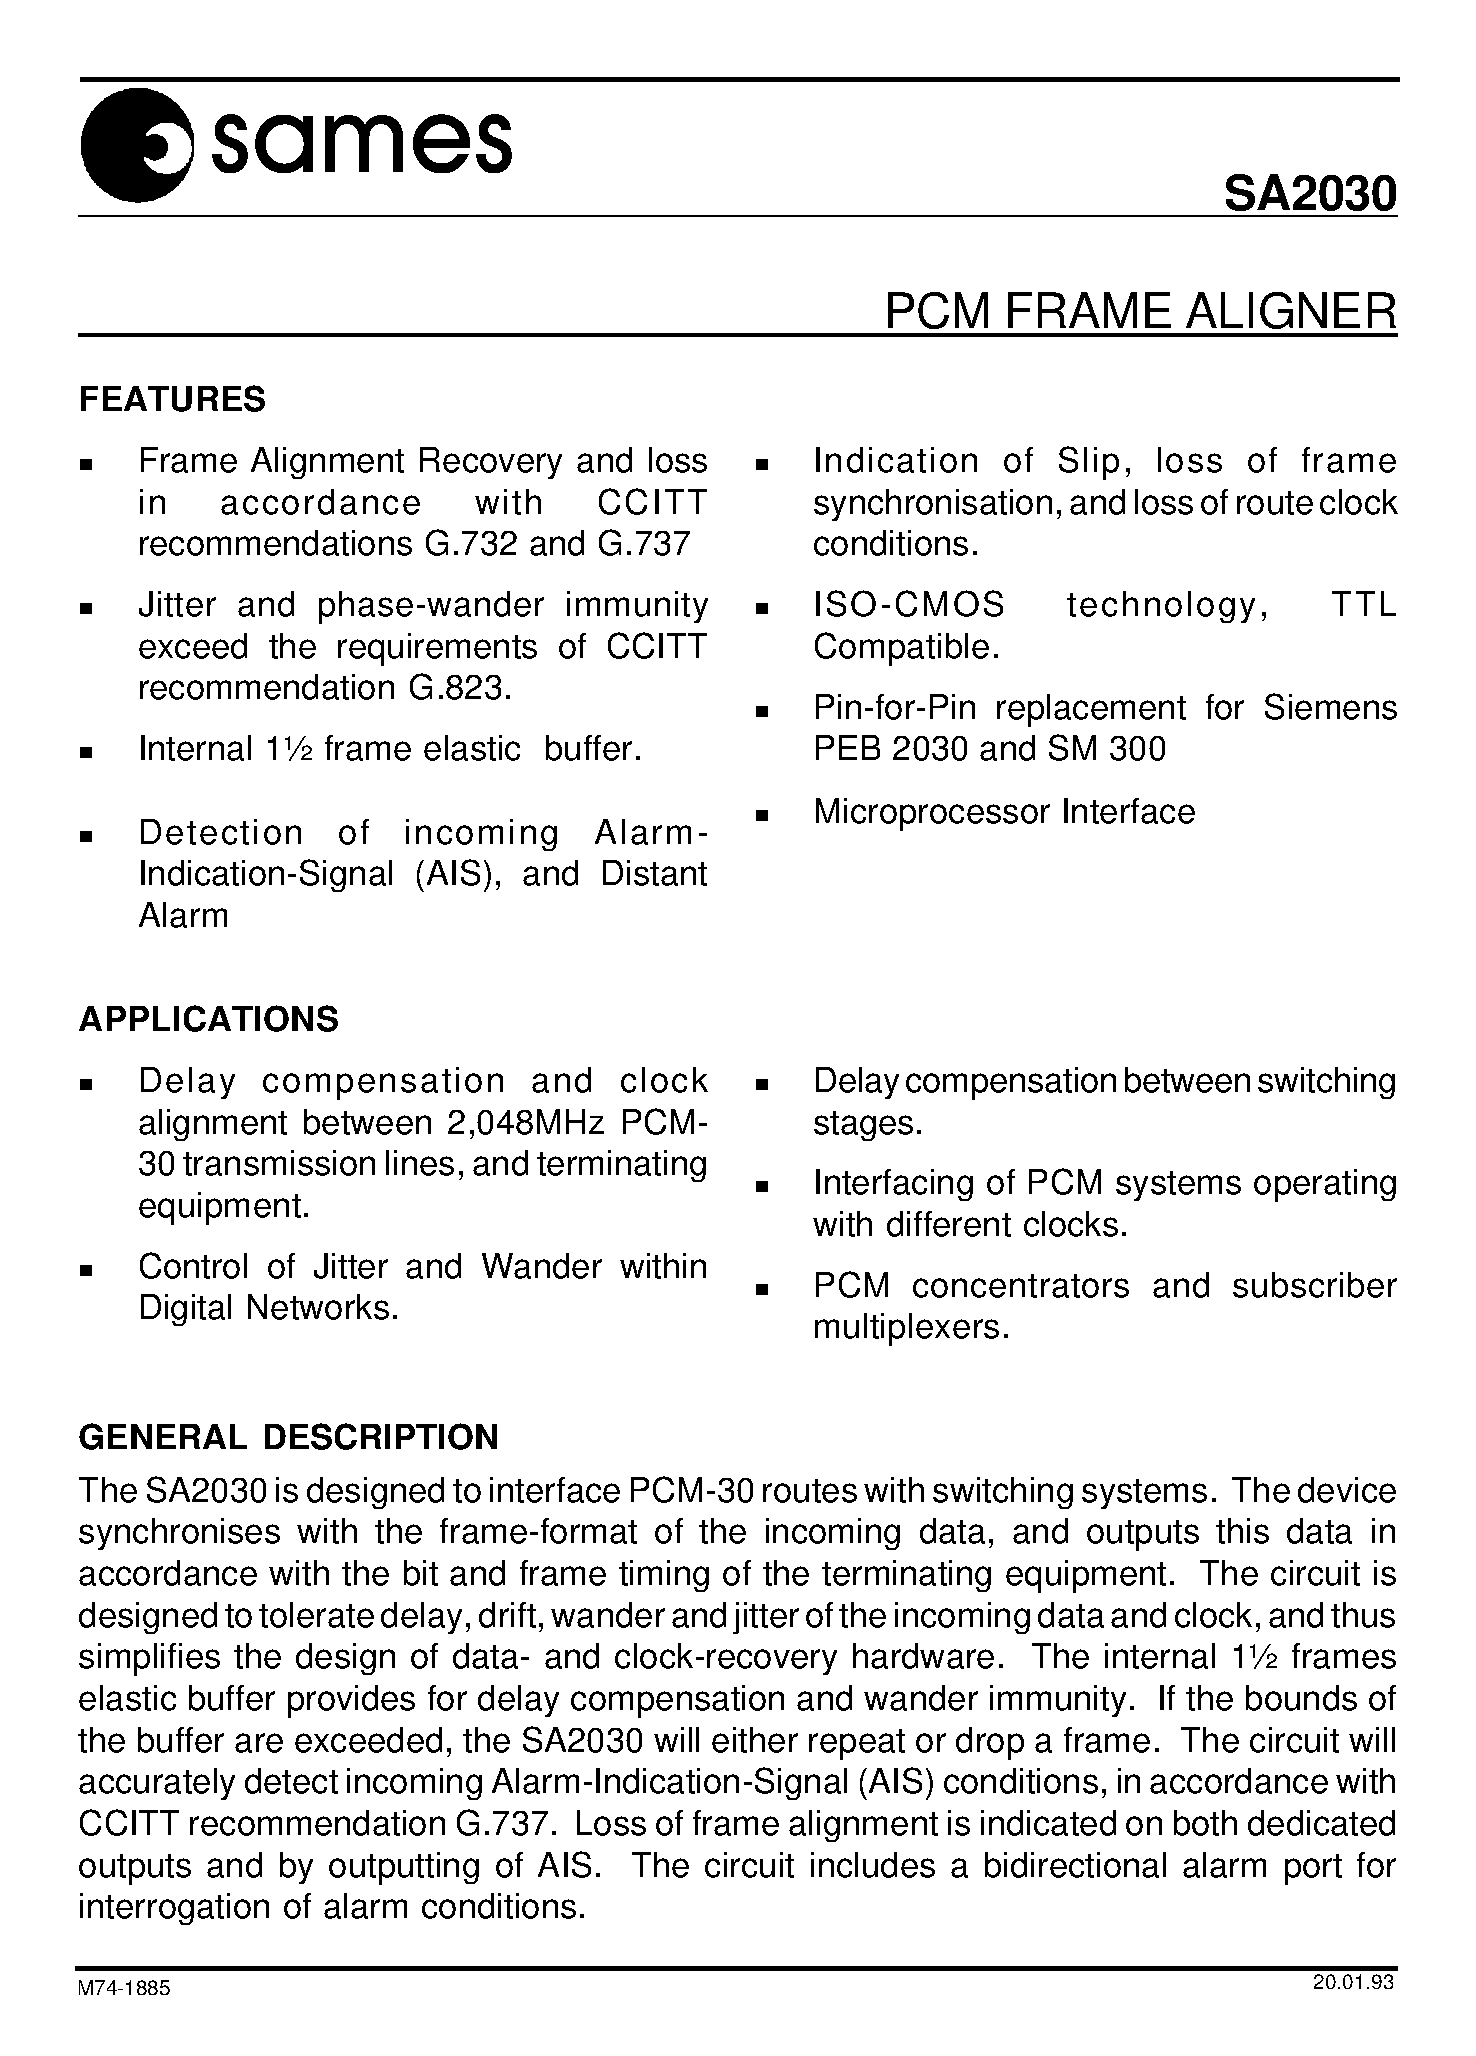 Datasheet SA2030 - PCM FRAME ALIGNER page 1